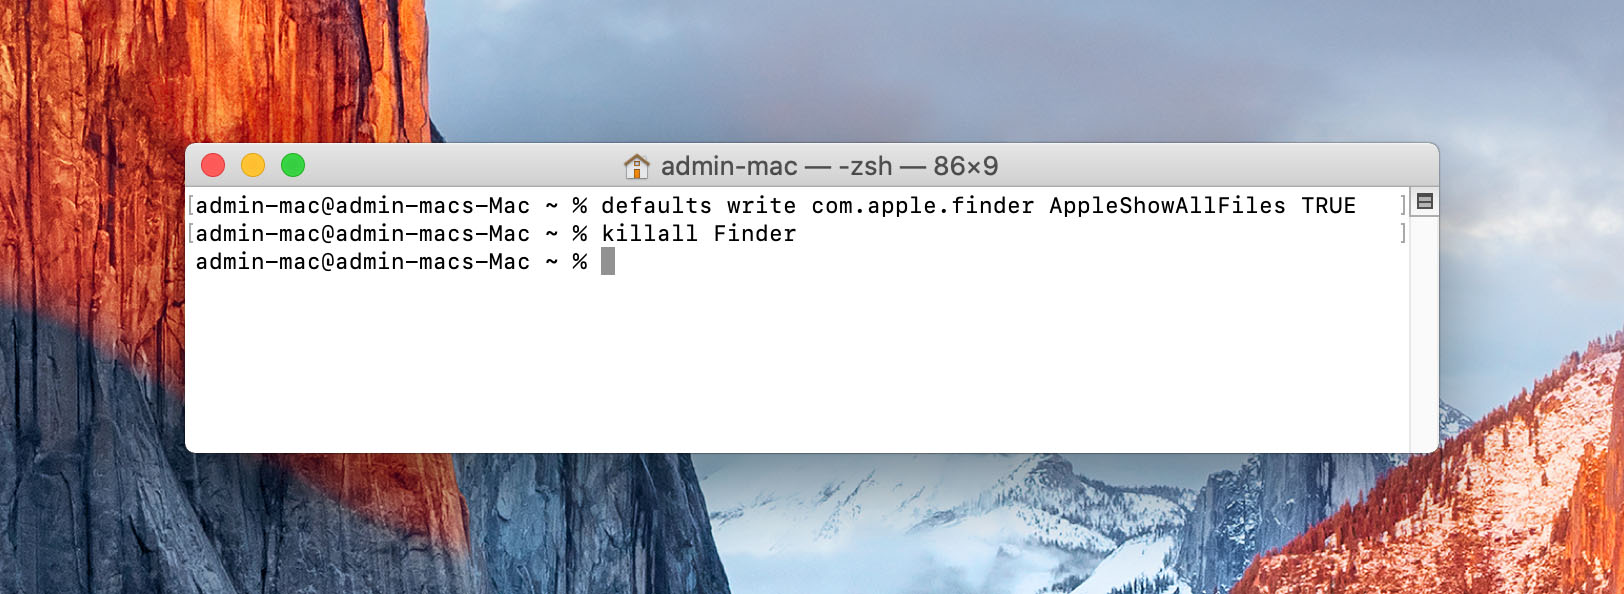 Show hidden files with terminal in macOS Capitan